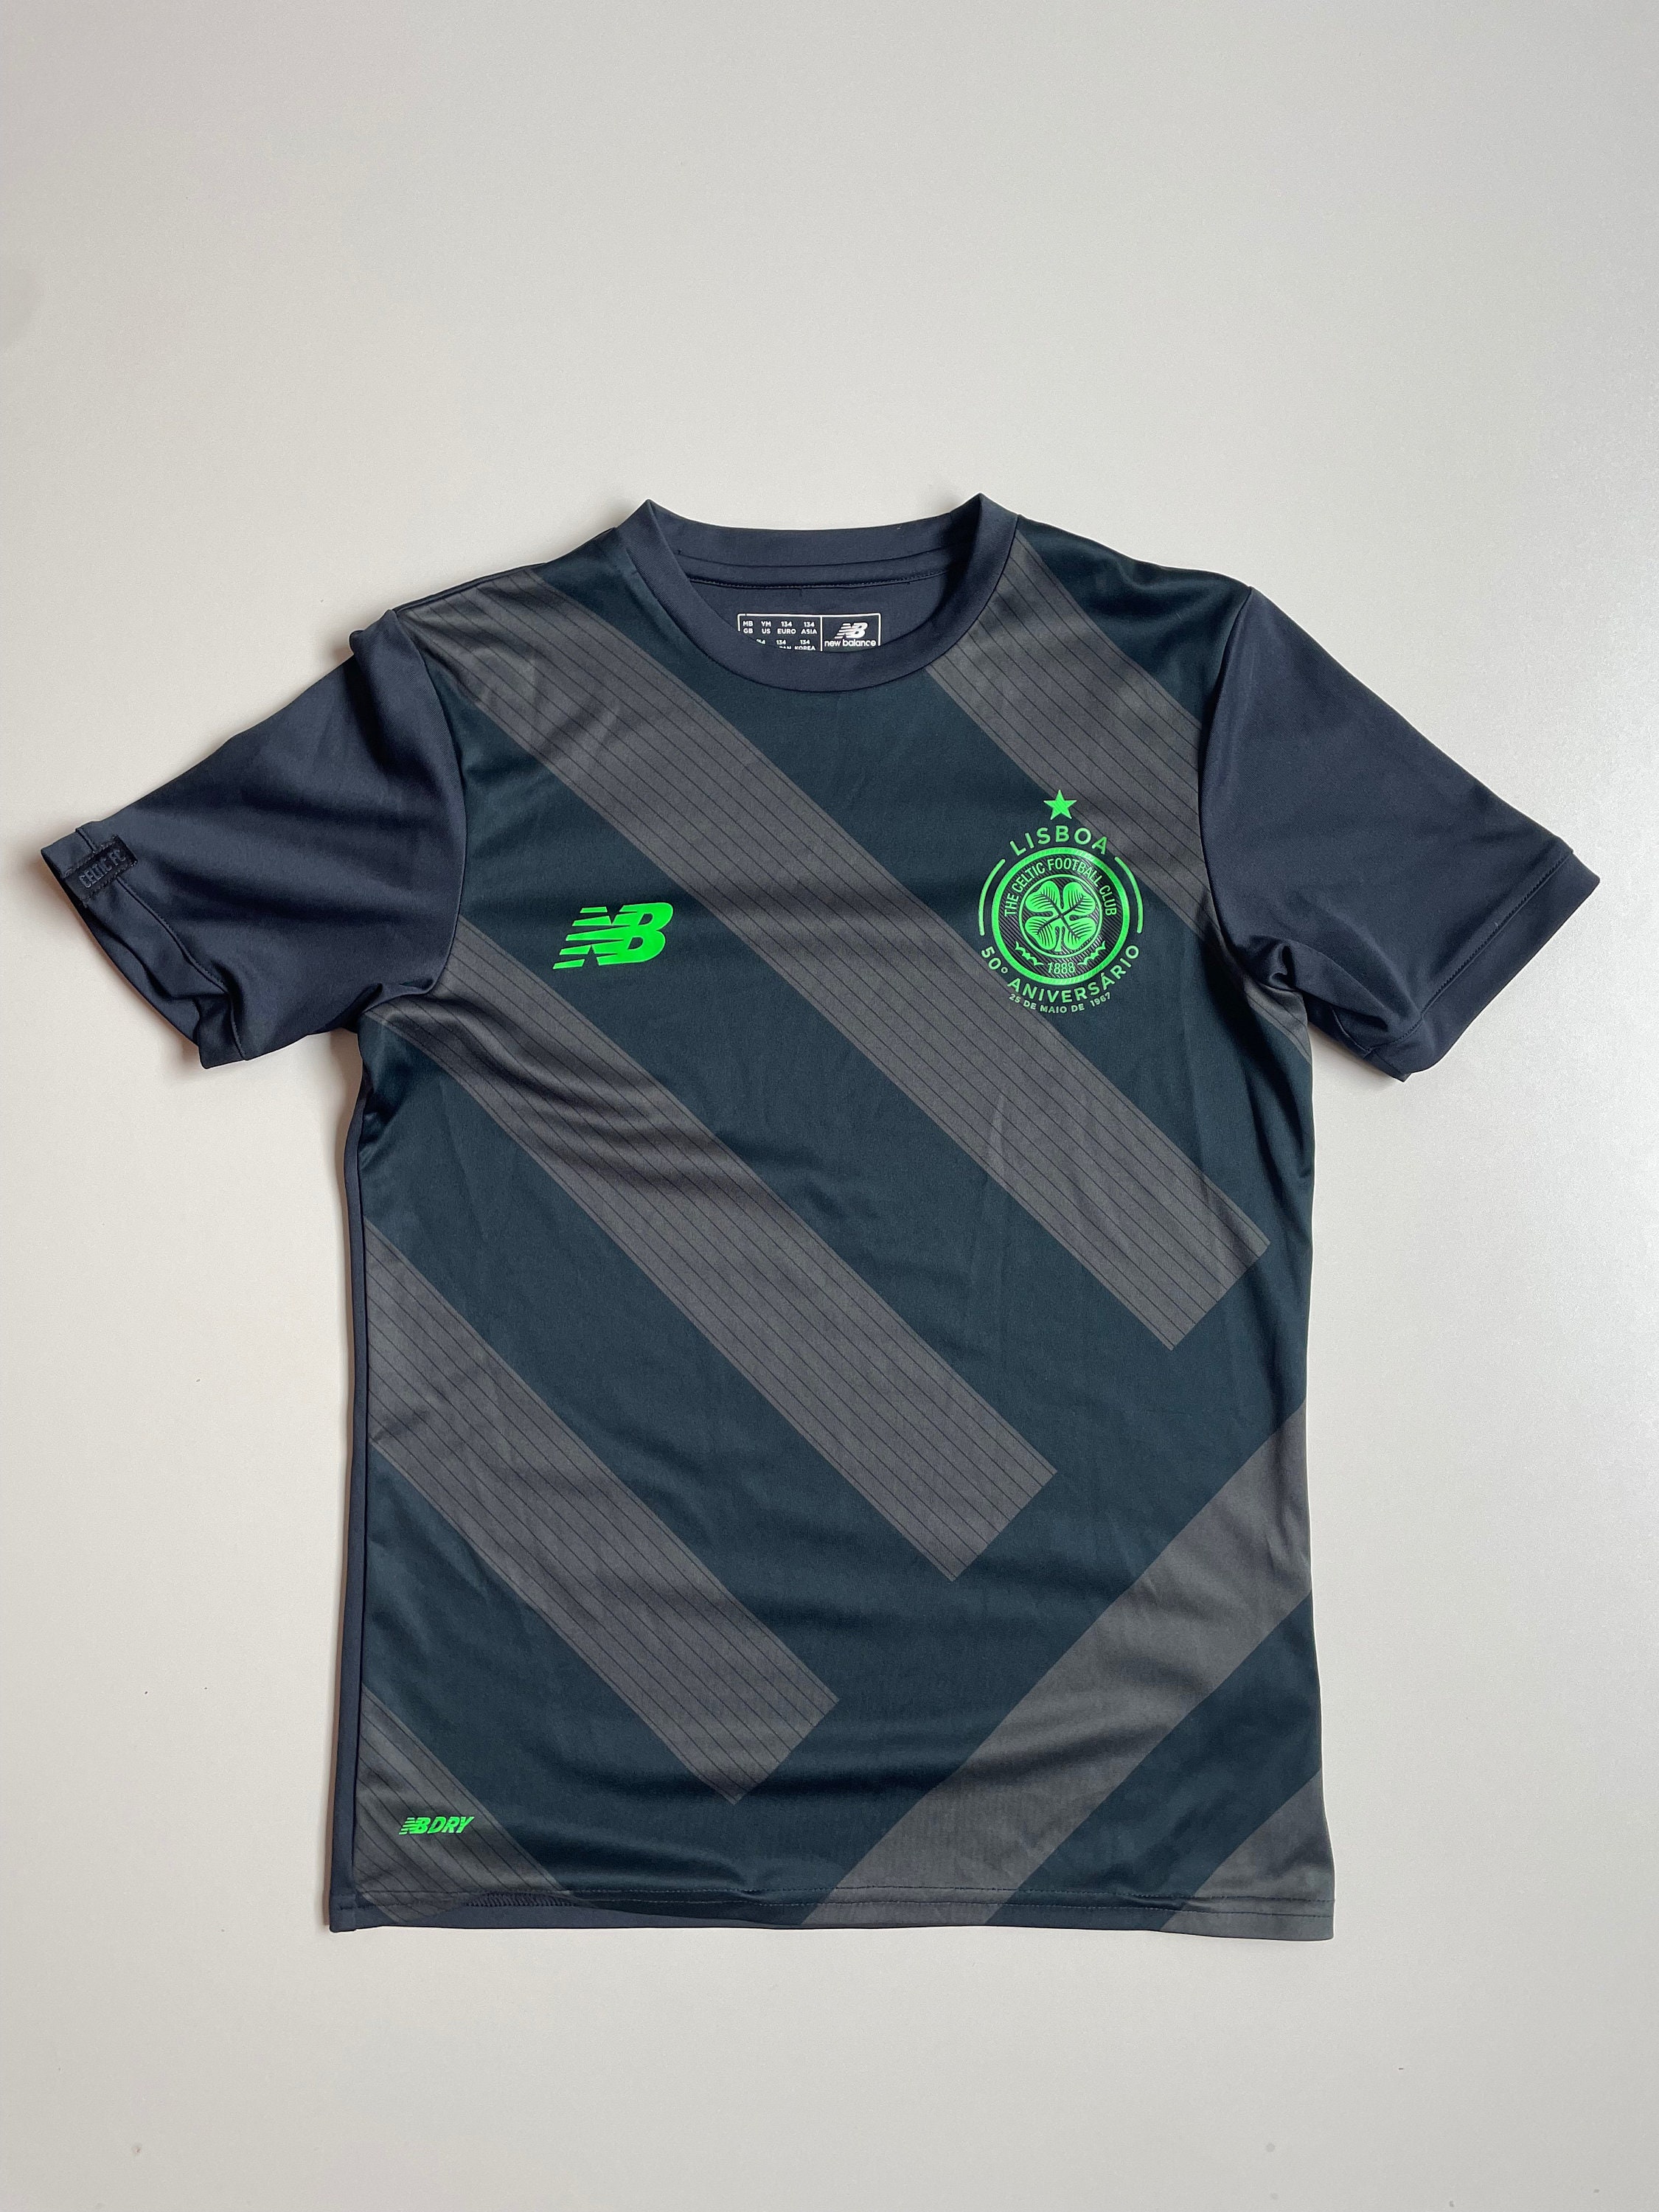 Celtic Jersey 17 18,Celtic Shirt 2017 18,celtic home kid kits Size:18-19